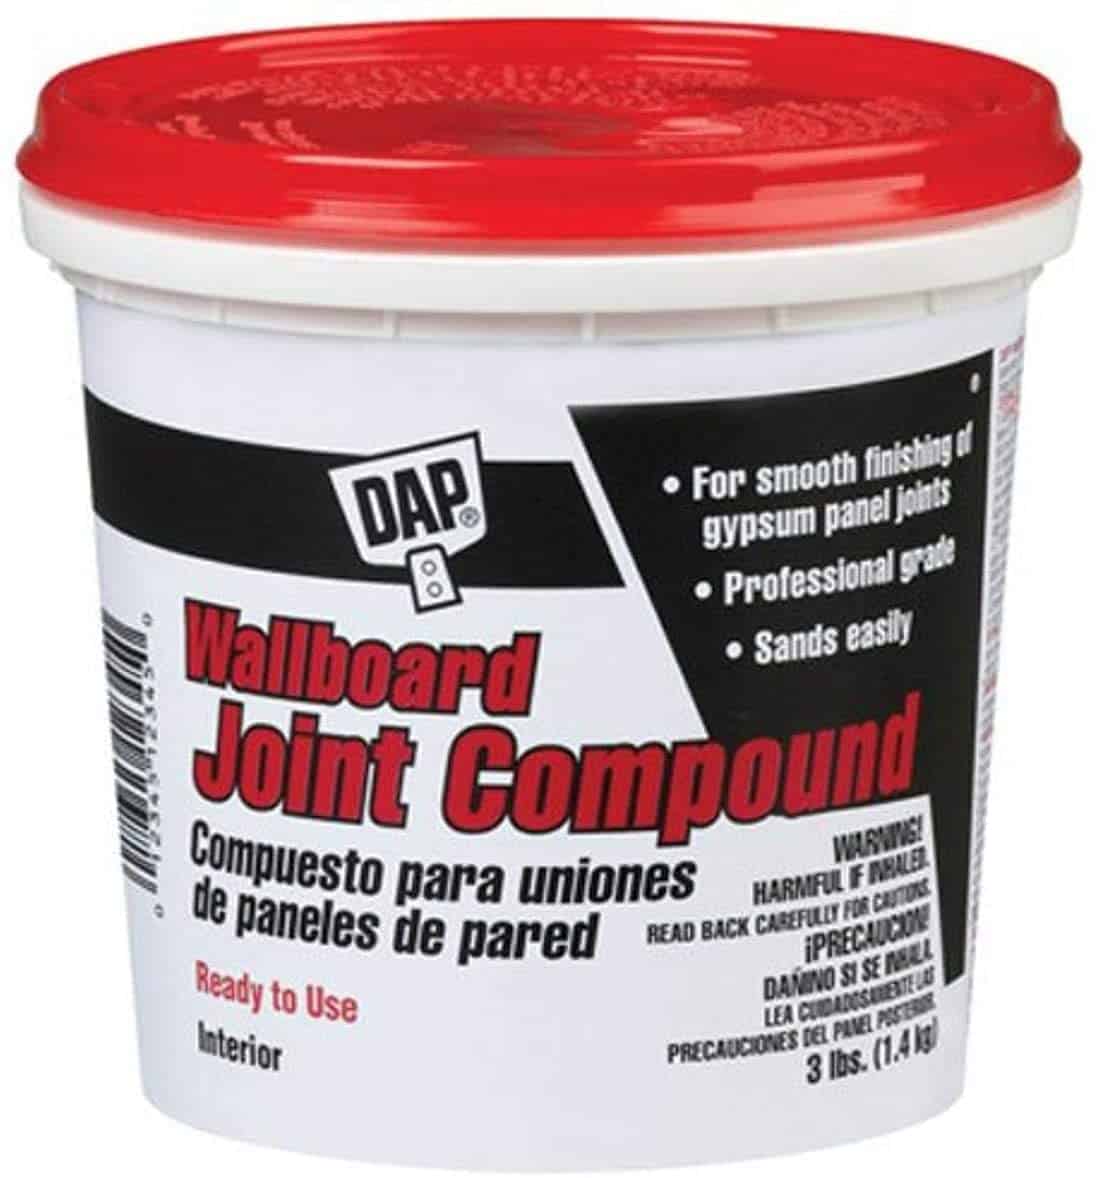 Dap 10100 Wallboard Joint Compound